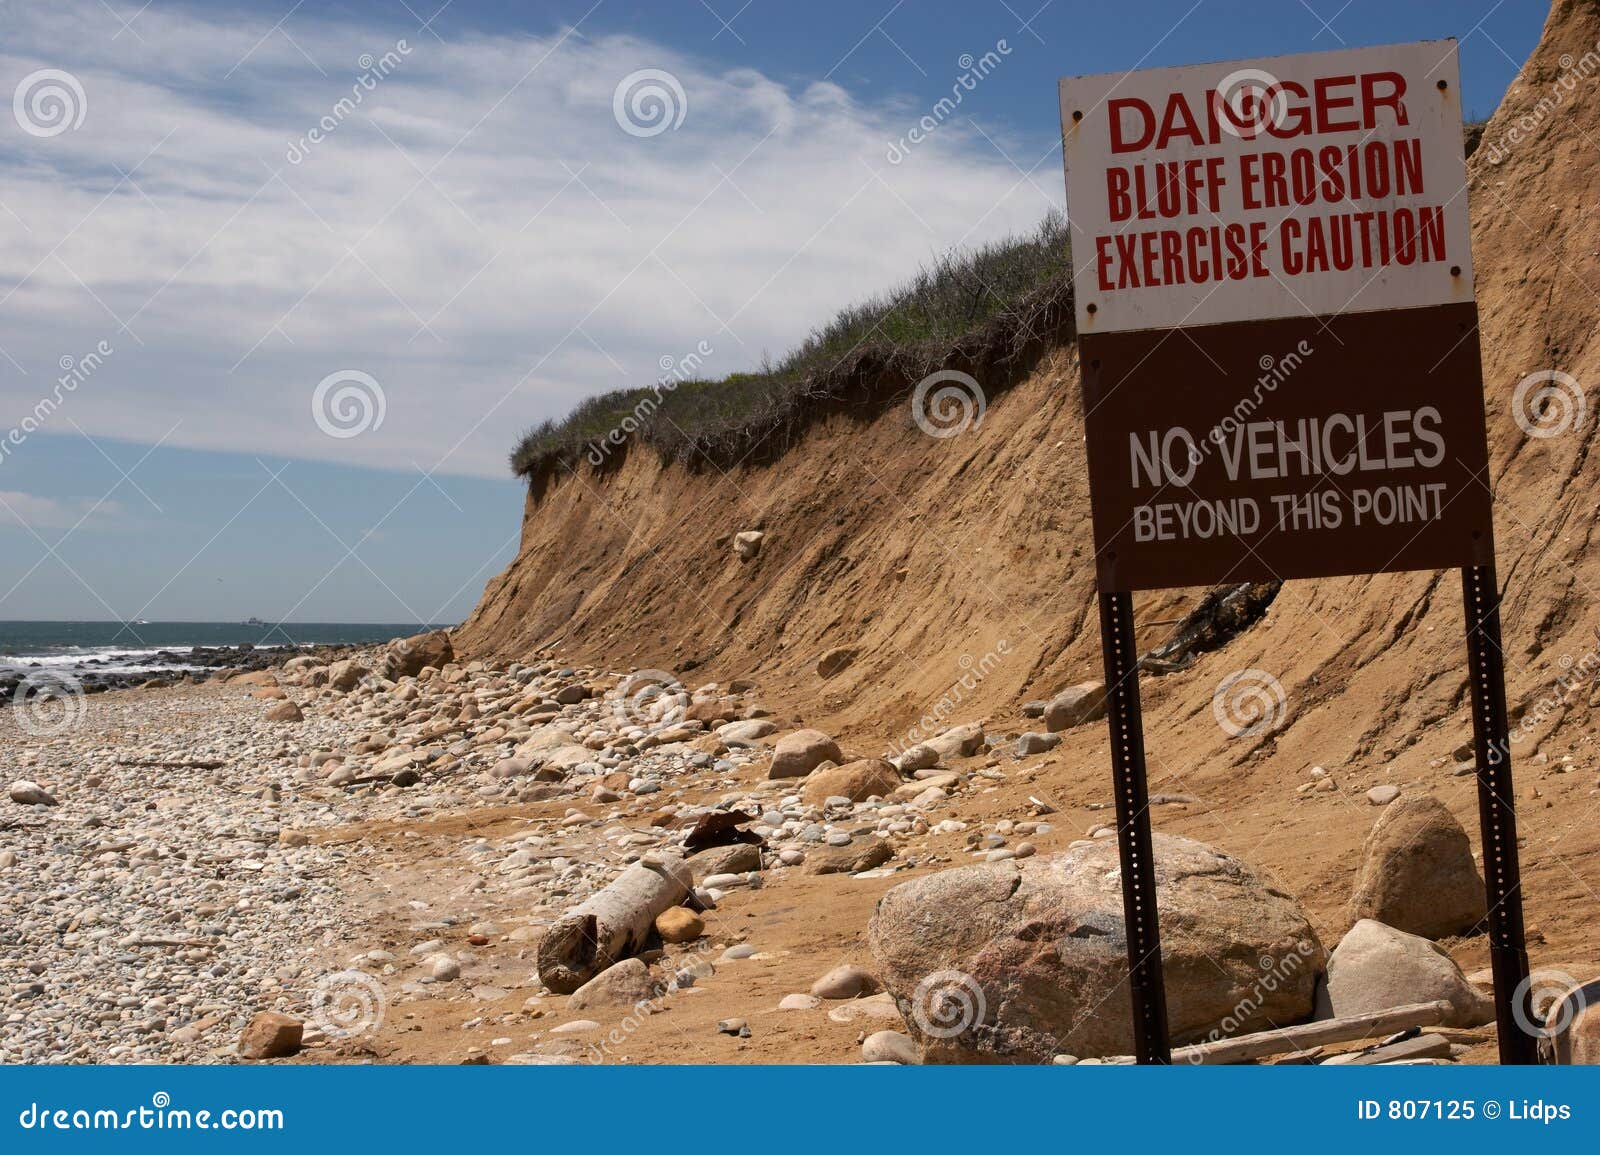 bluff erosion warning